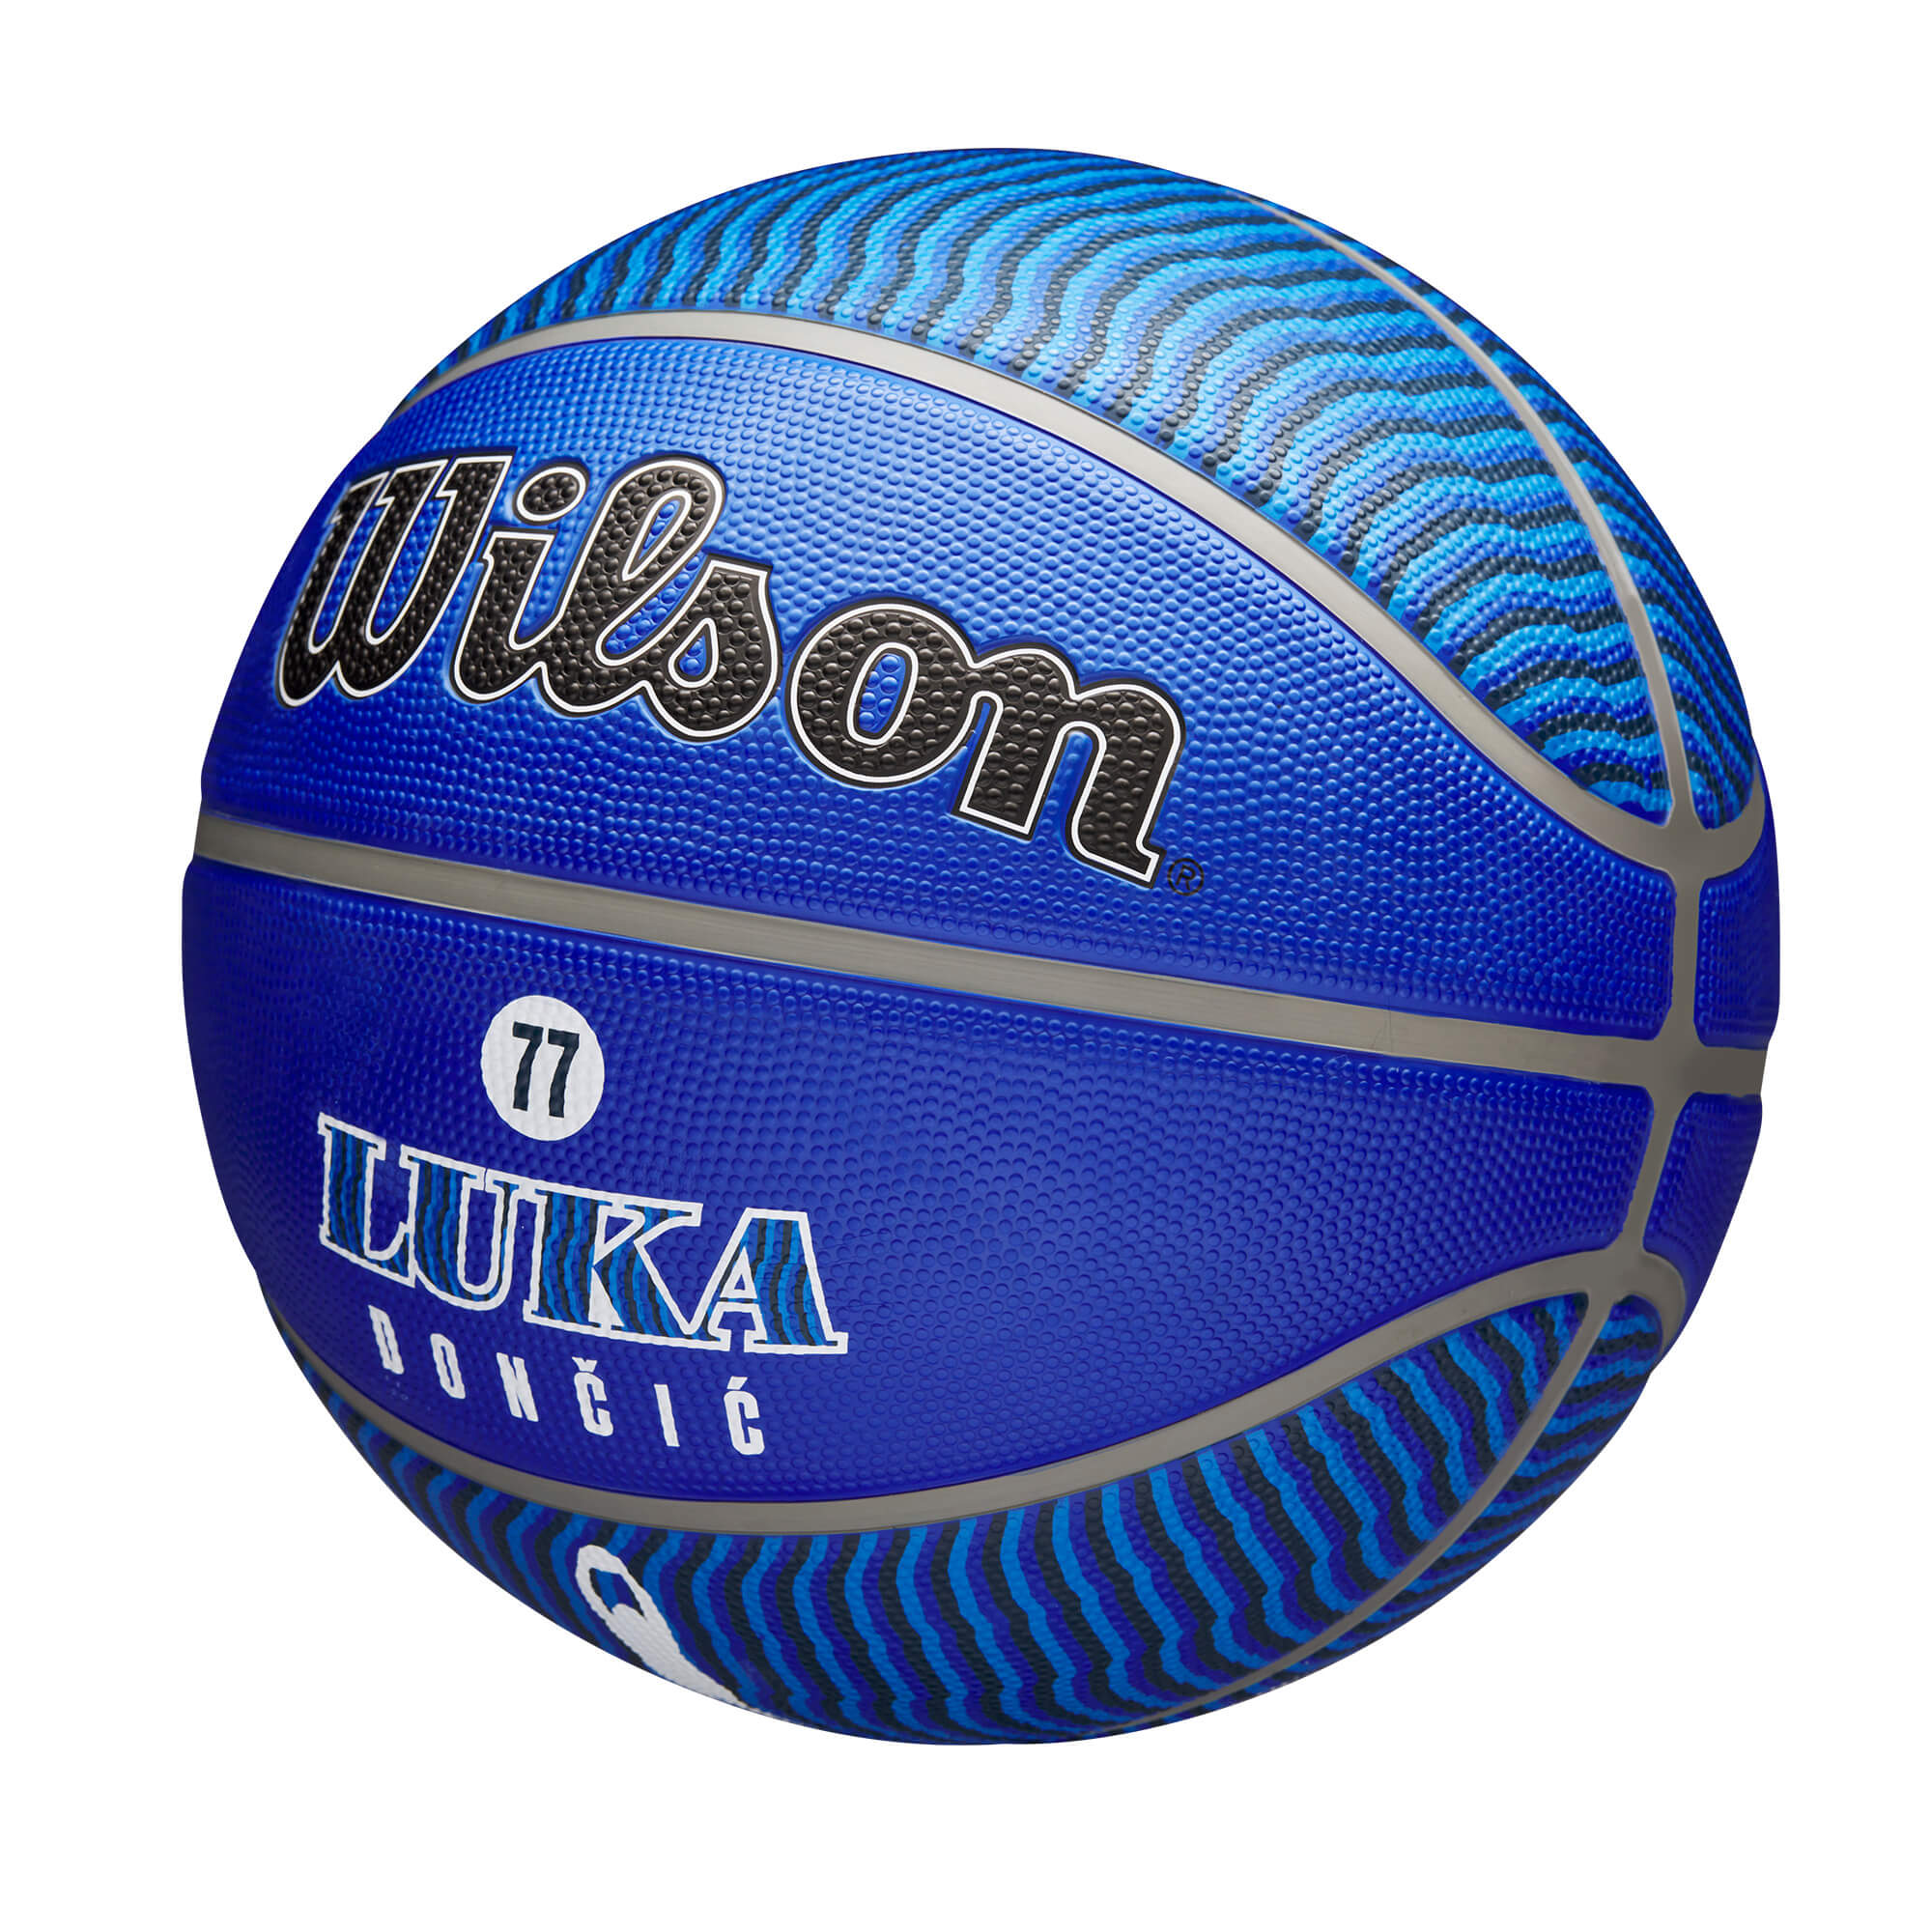 Ballons de basket NBA Player Luka Doncic